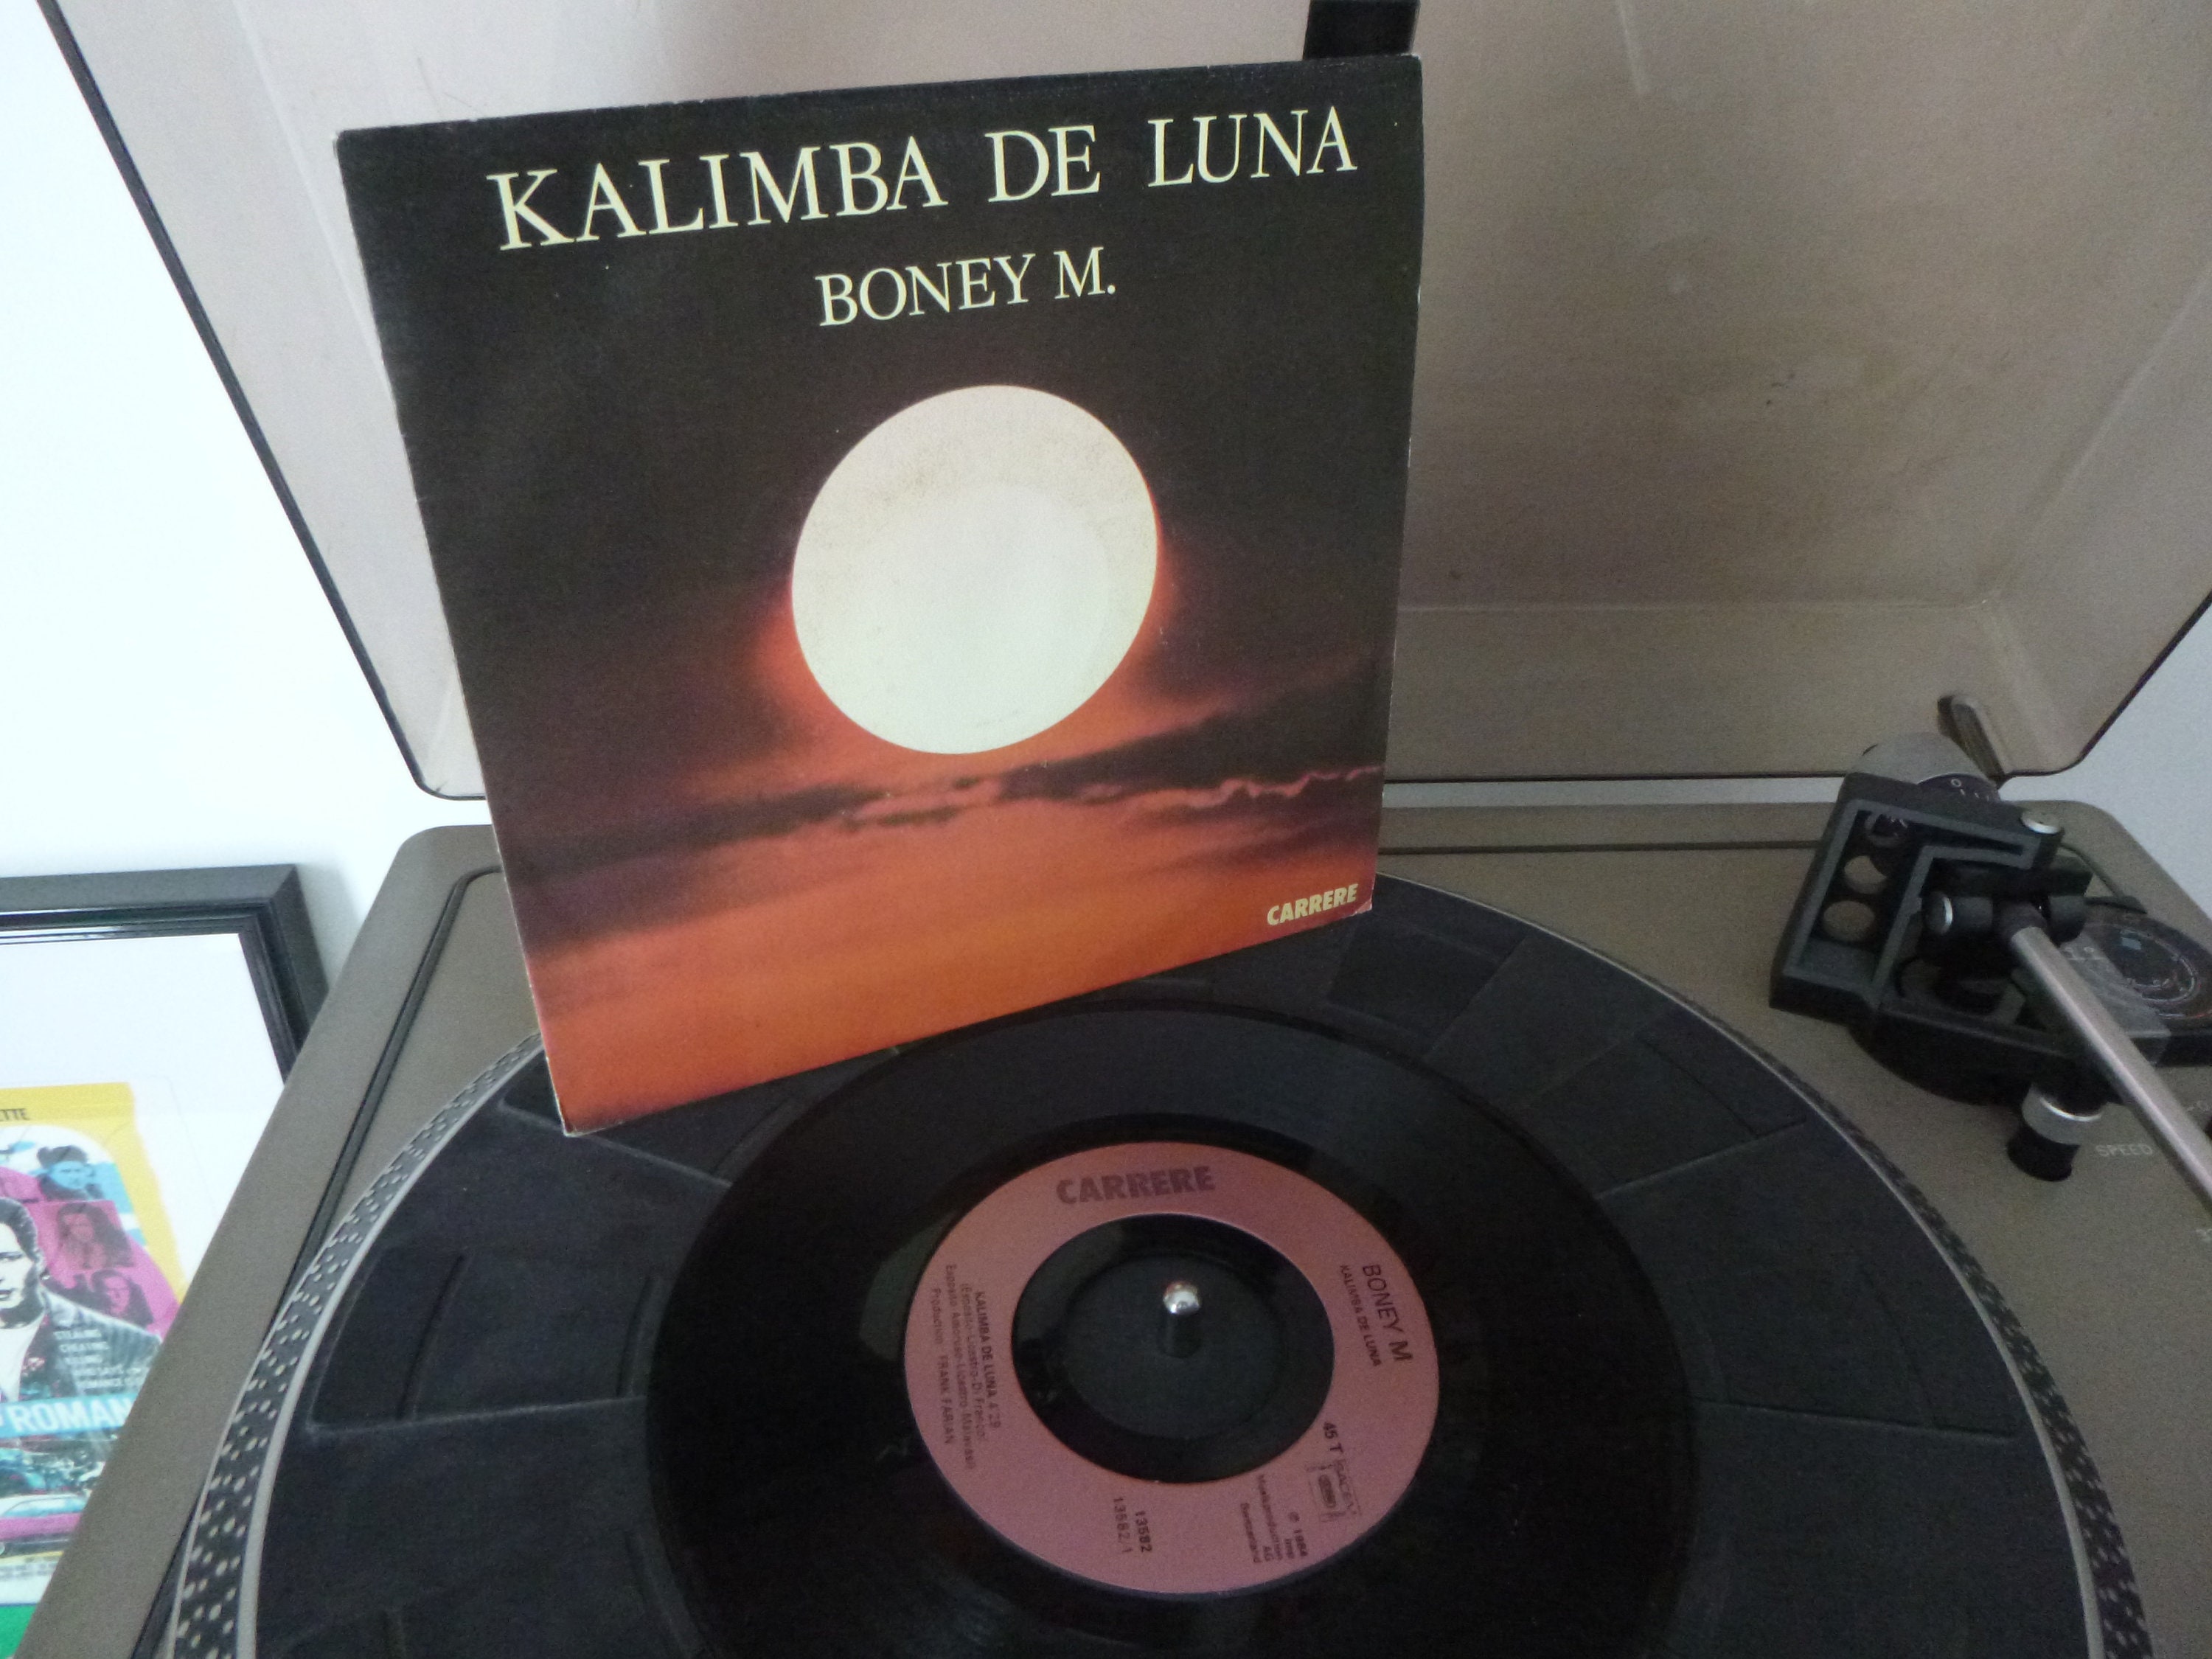 Boney m kalimba. Boney m "Kalimba de Luna".